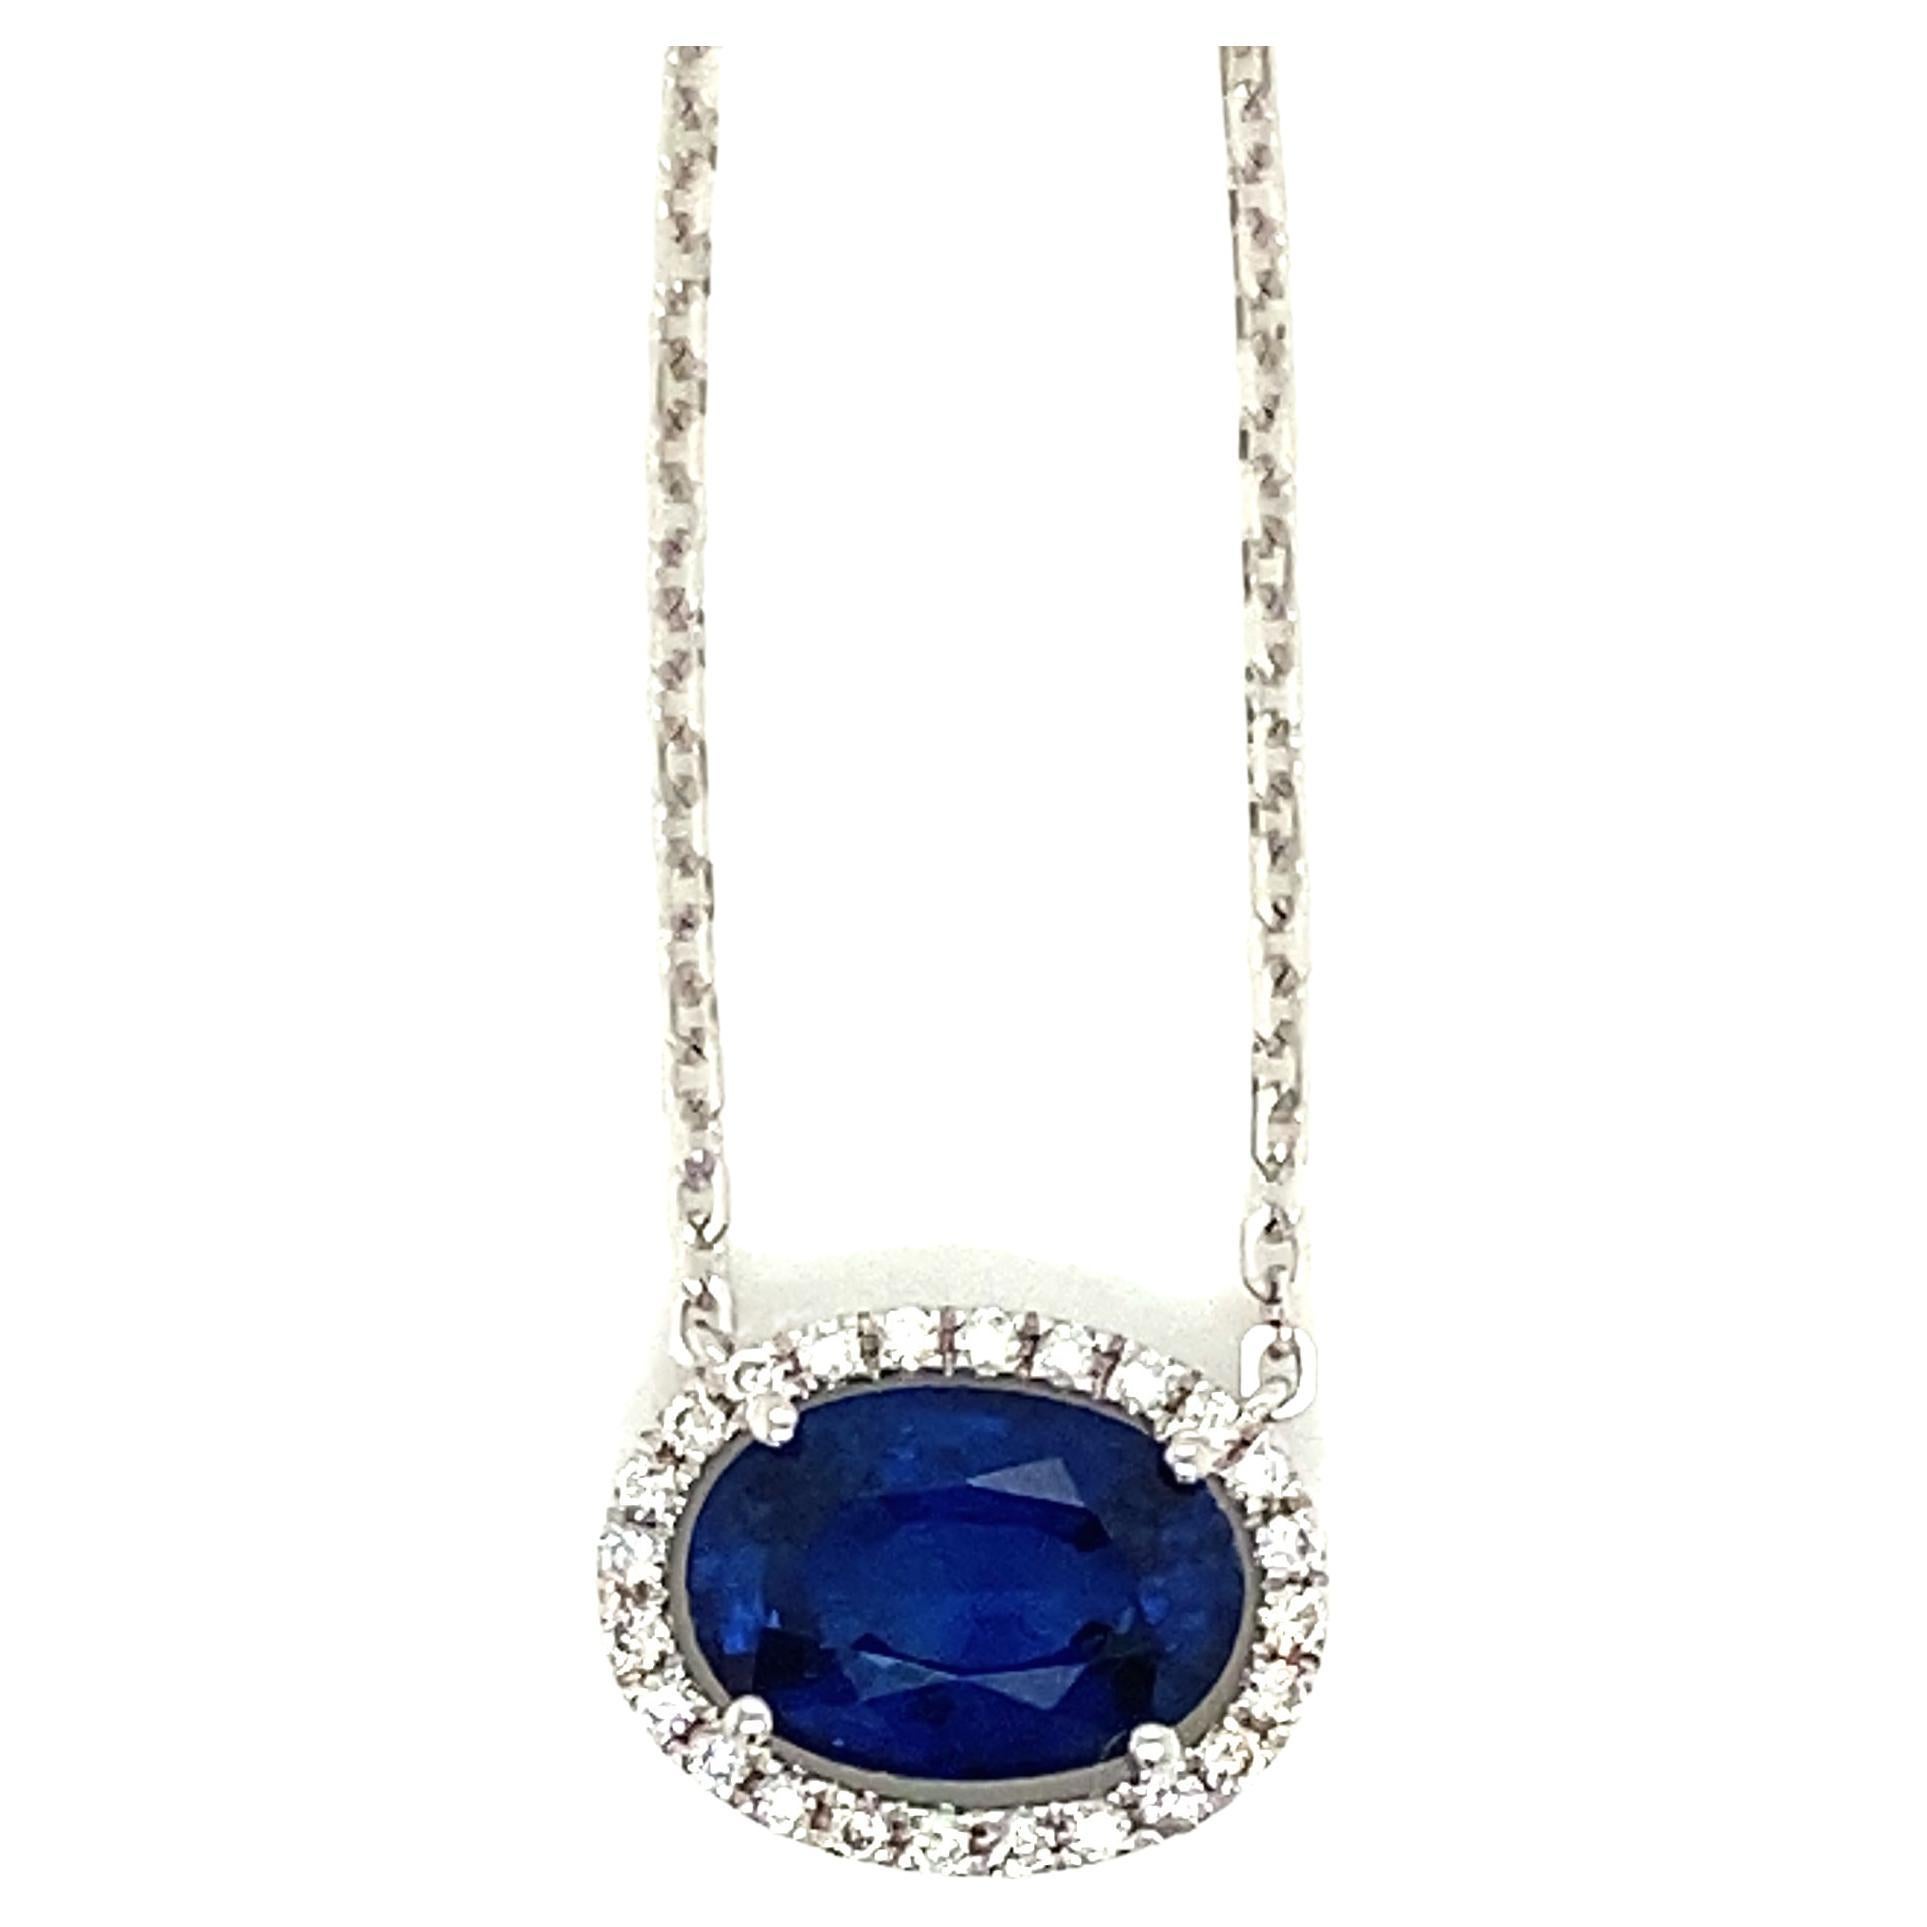 2.29 Carat Oval-Cut Vivid Blue Sapphire and White Diamond Pendant Necklace For Sale